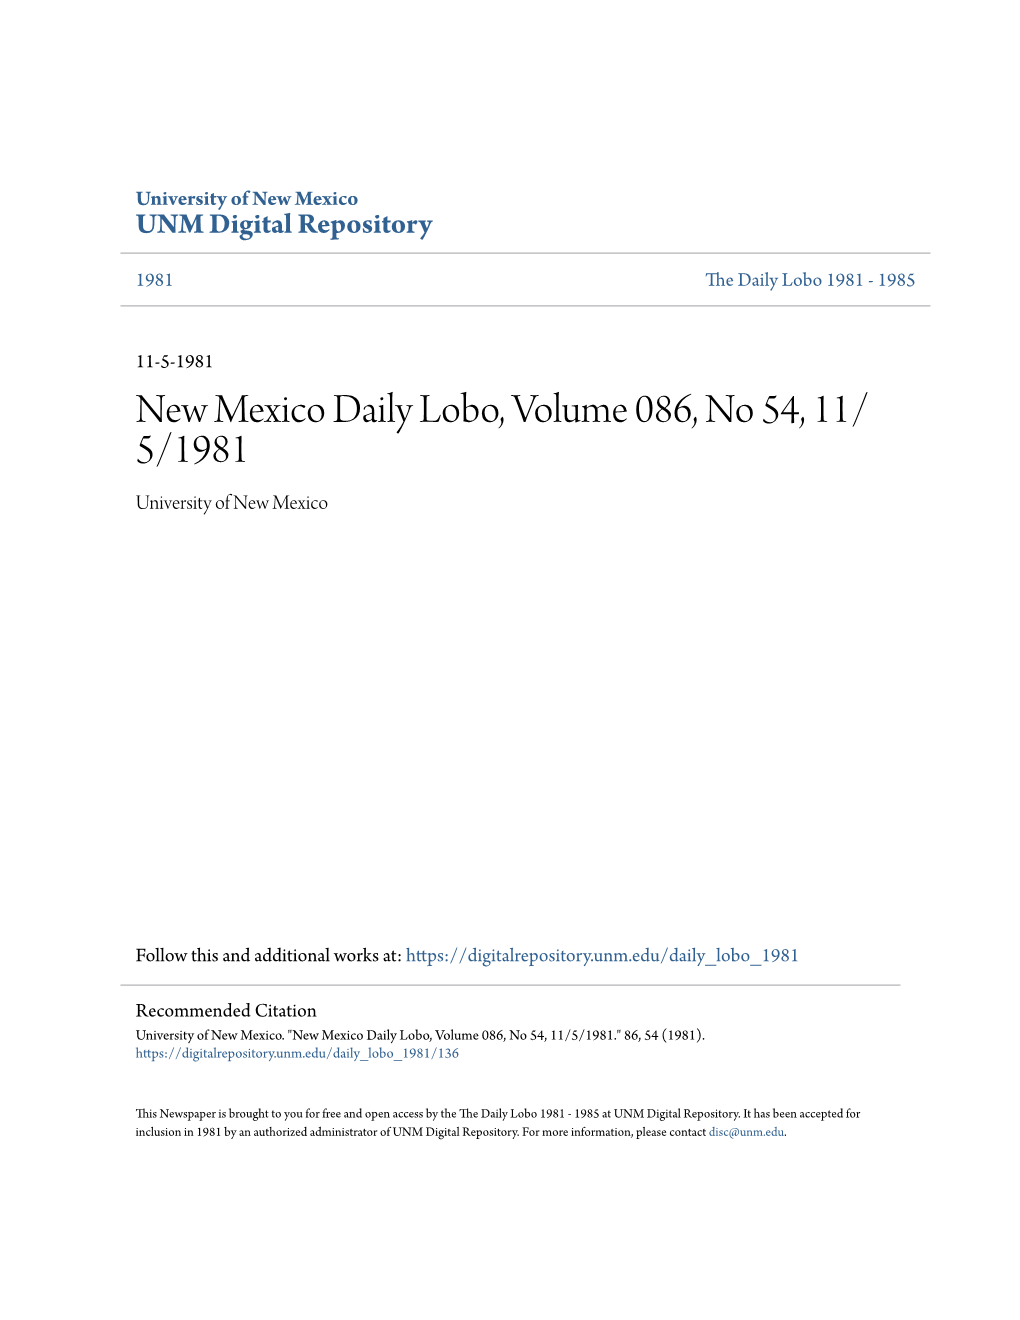 New Mexico Daily Lobo, Volume 086, No 54, 11/5/1981." 86, 54 (1981)